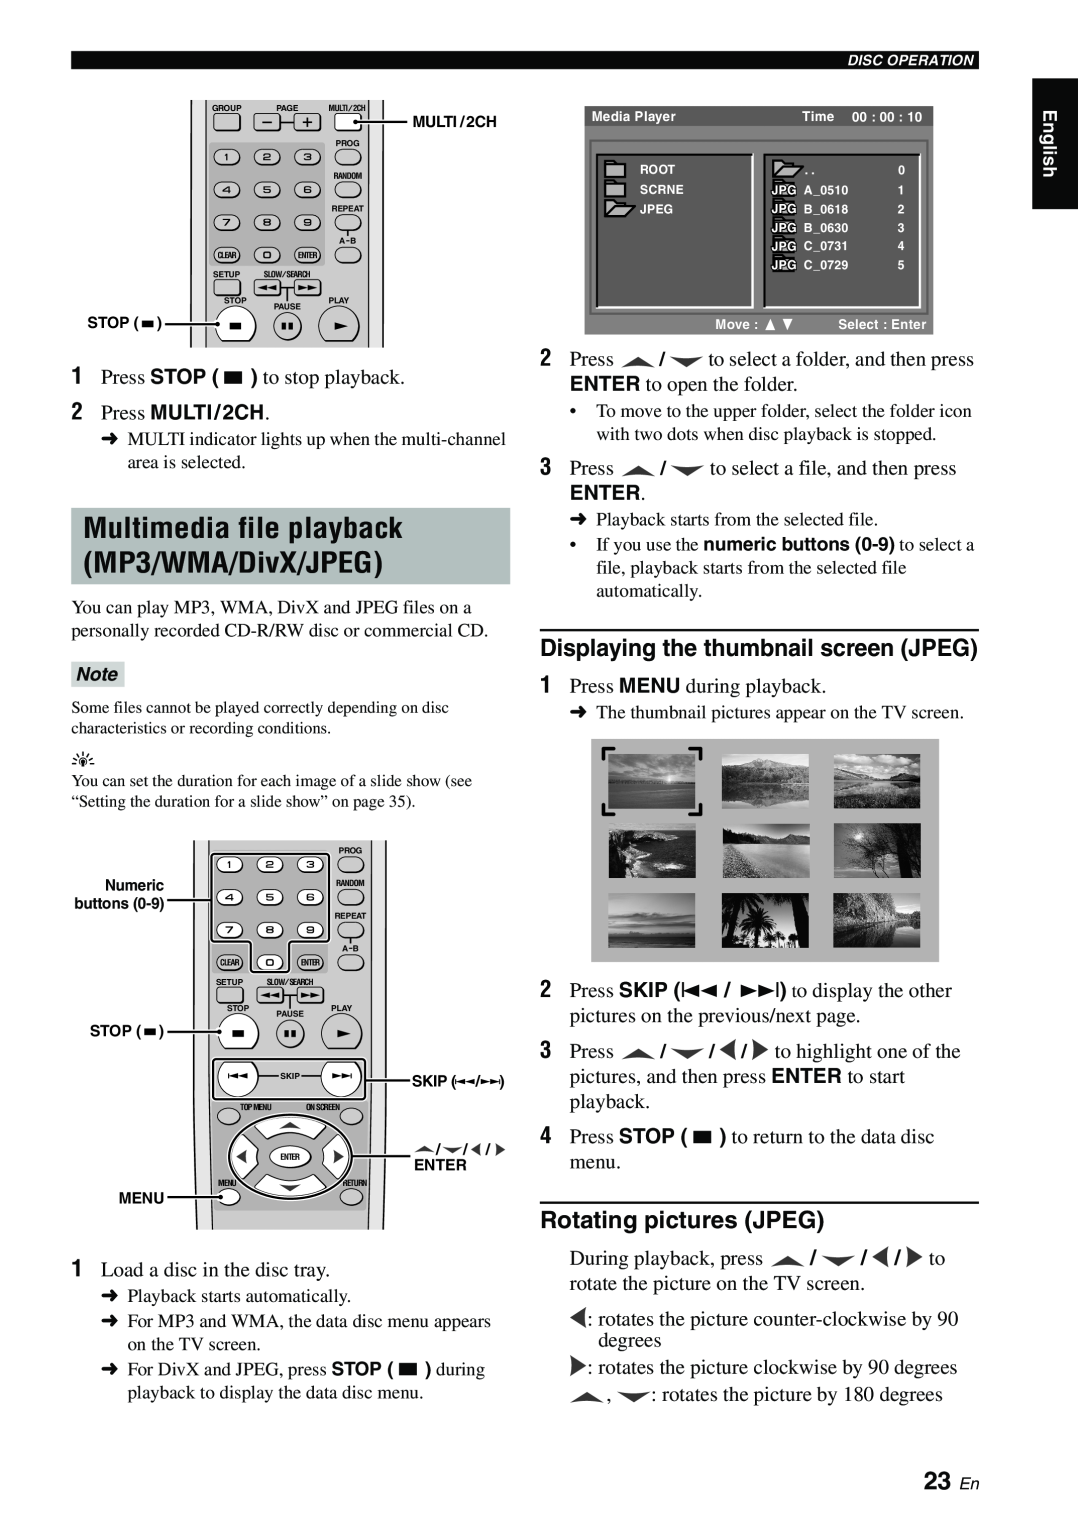 Yamaha DVD-S1700B manual Multimedia file playback MP3/WMA/DivX/JPEG, 23 En, Displaying the thumbnail screen JPEG, Enter 